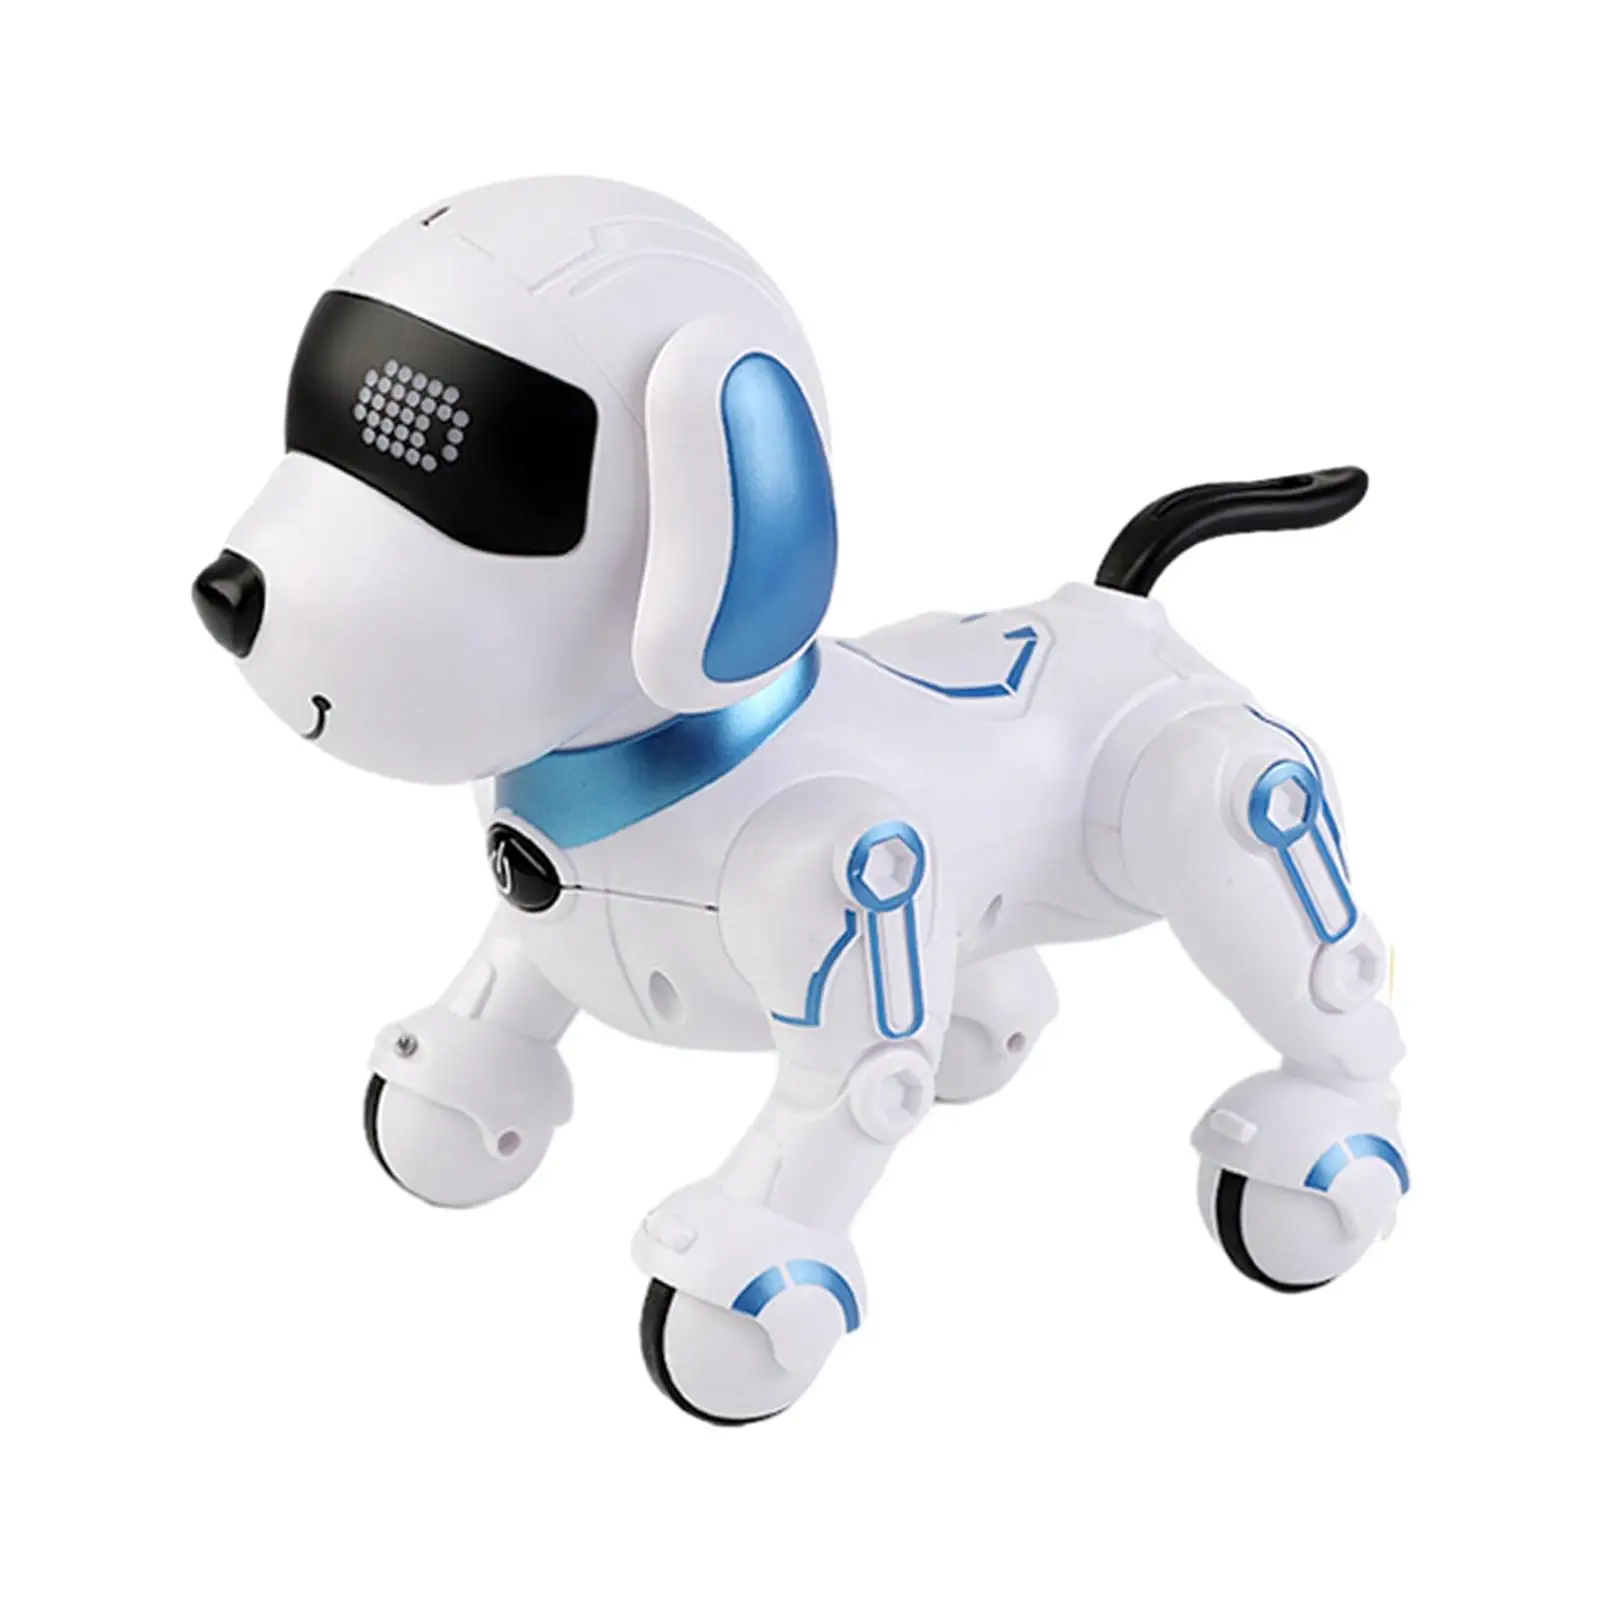 Remote Control Robot Dog Dancing Left Pet Dog Robot Programming Robotic Puppy for Kids Boys and Girls Age 5 6 7 8 9 10 Children